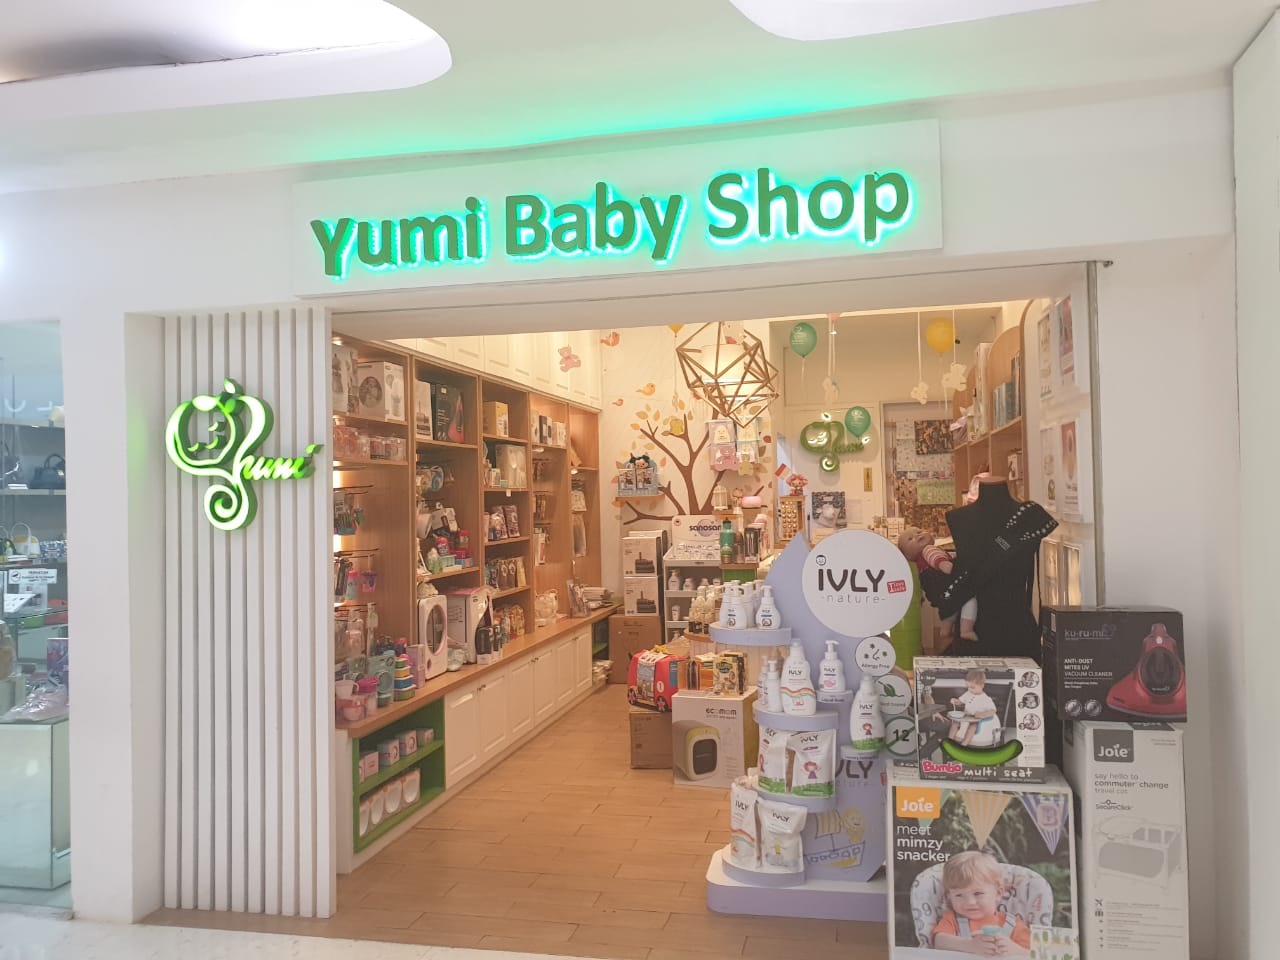 Yumi Baby Shop shop front in lippo mall puri st. moritz